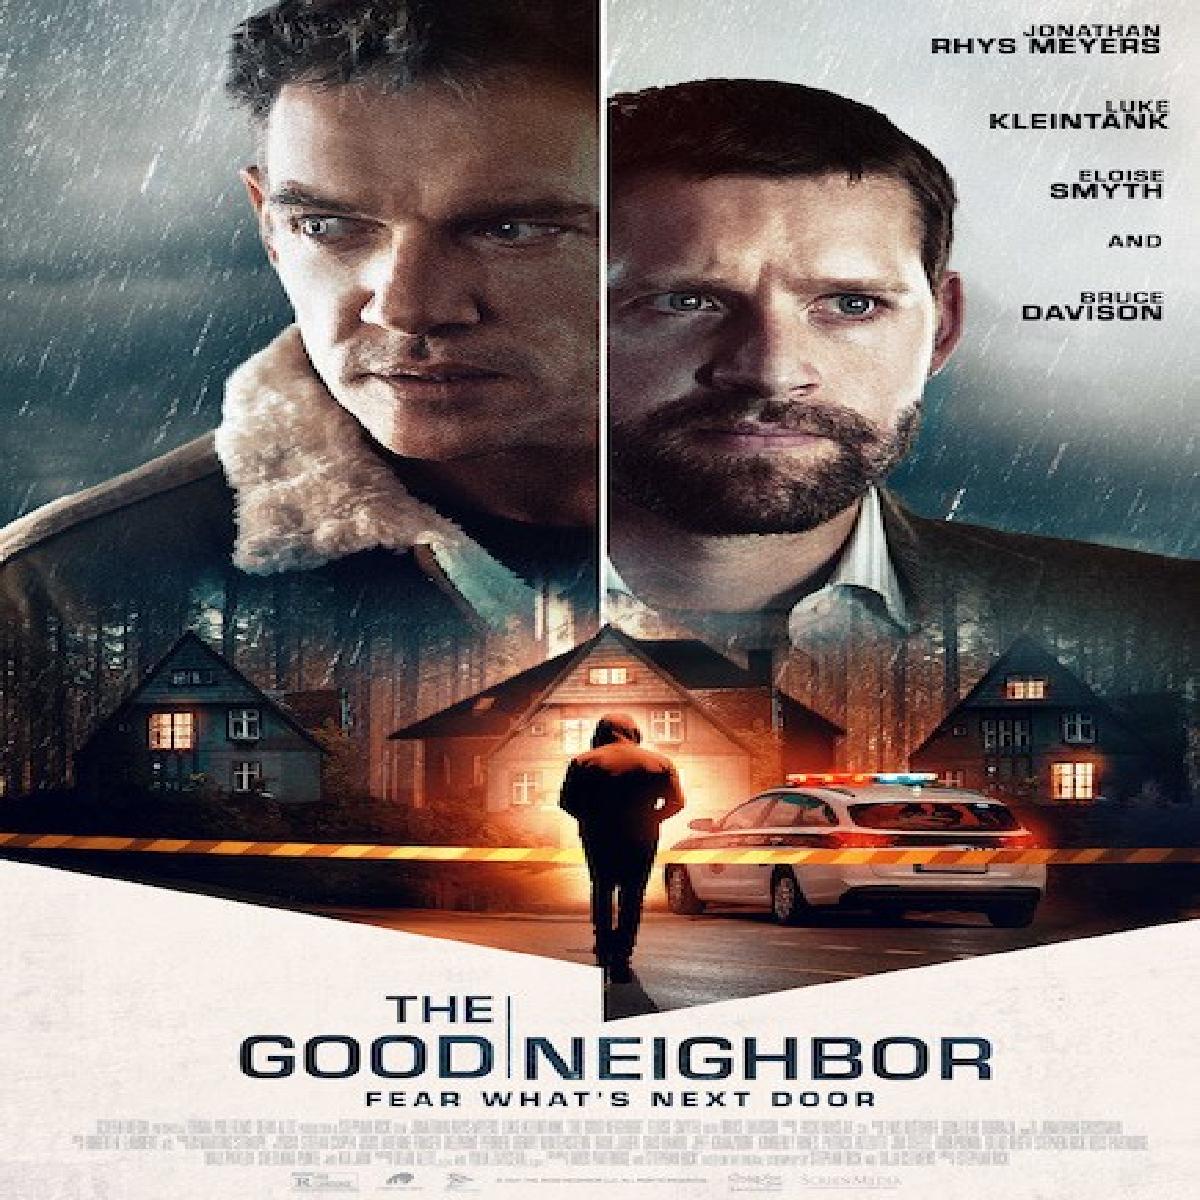 The Good Neighbor Trailer Is Here Starring Jonathan Rhys